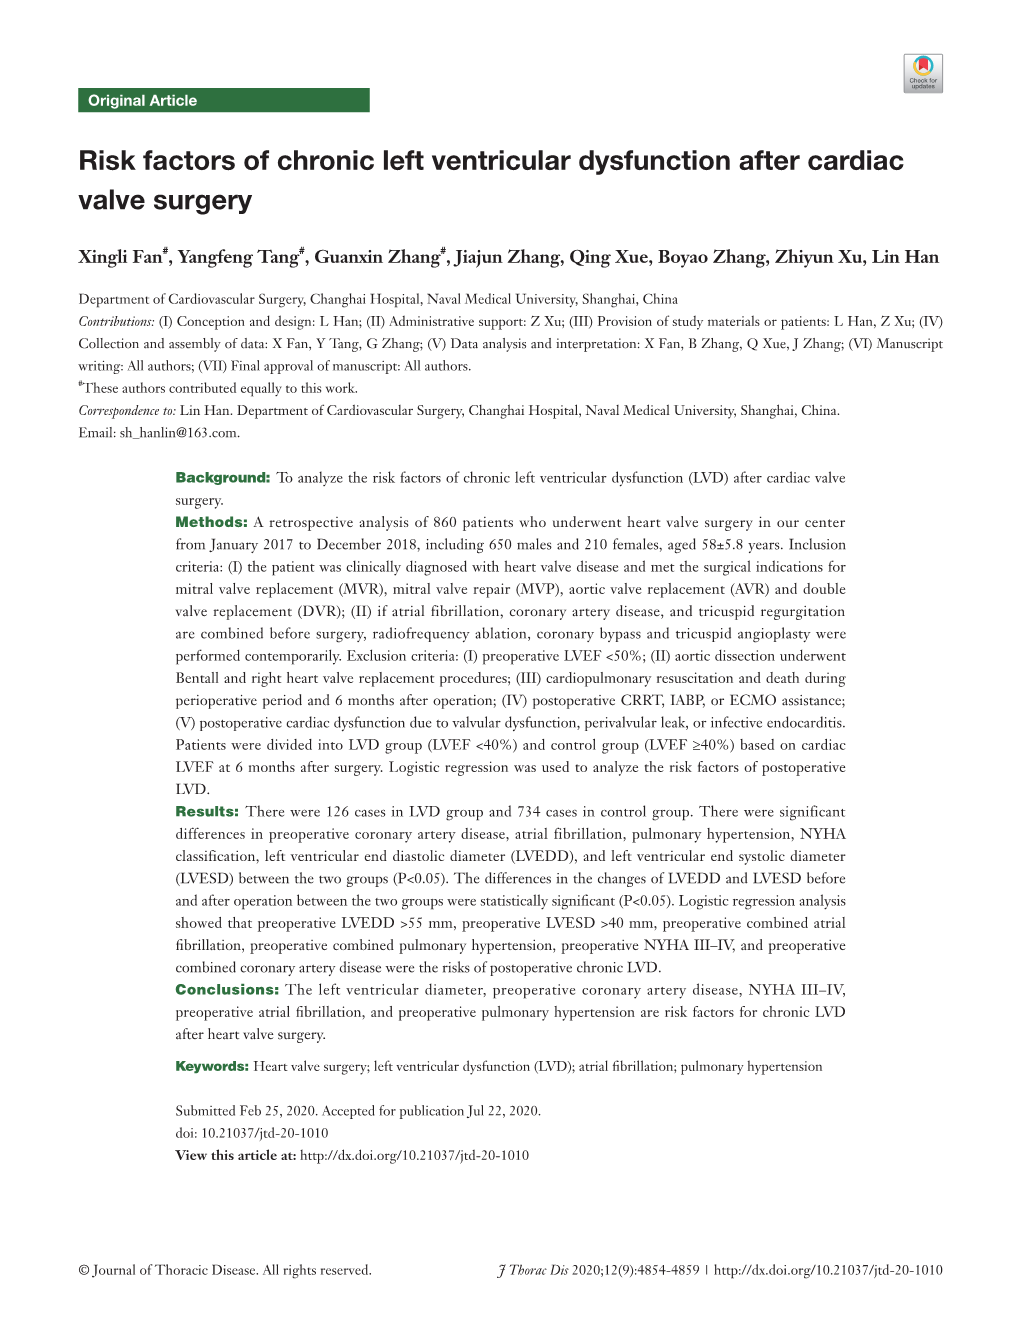 Risk Factors of Chronic Left Ventricular Dysfunction After Cardiac Valve Surgery